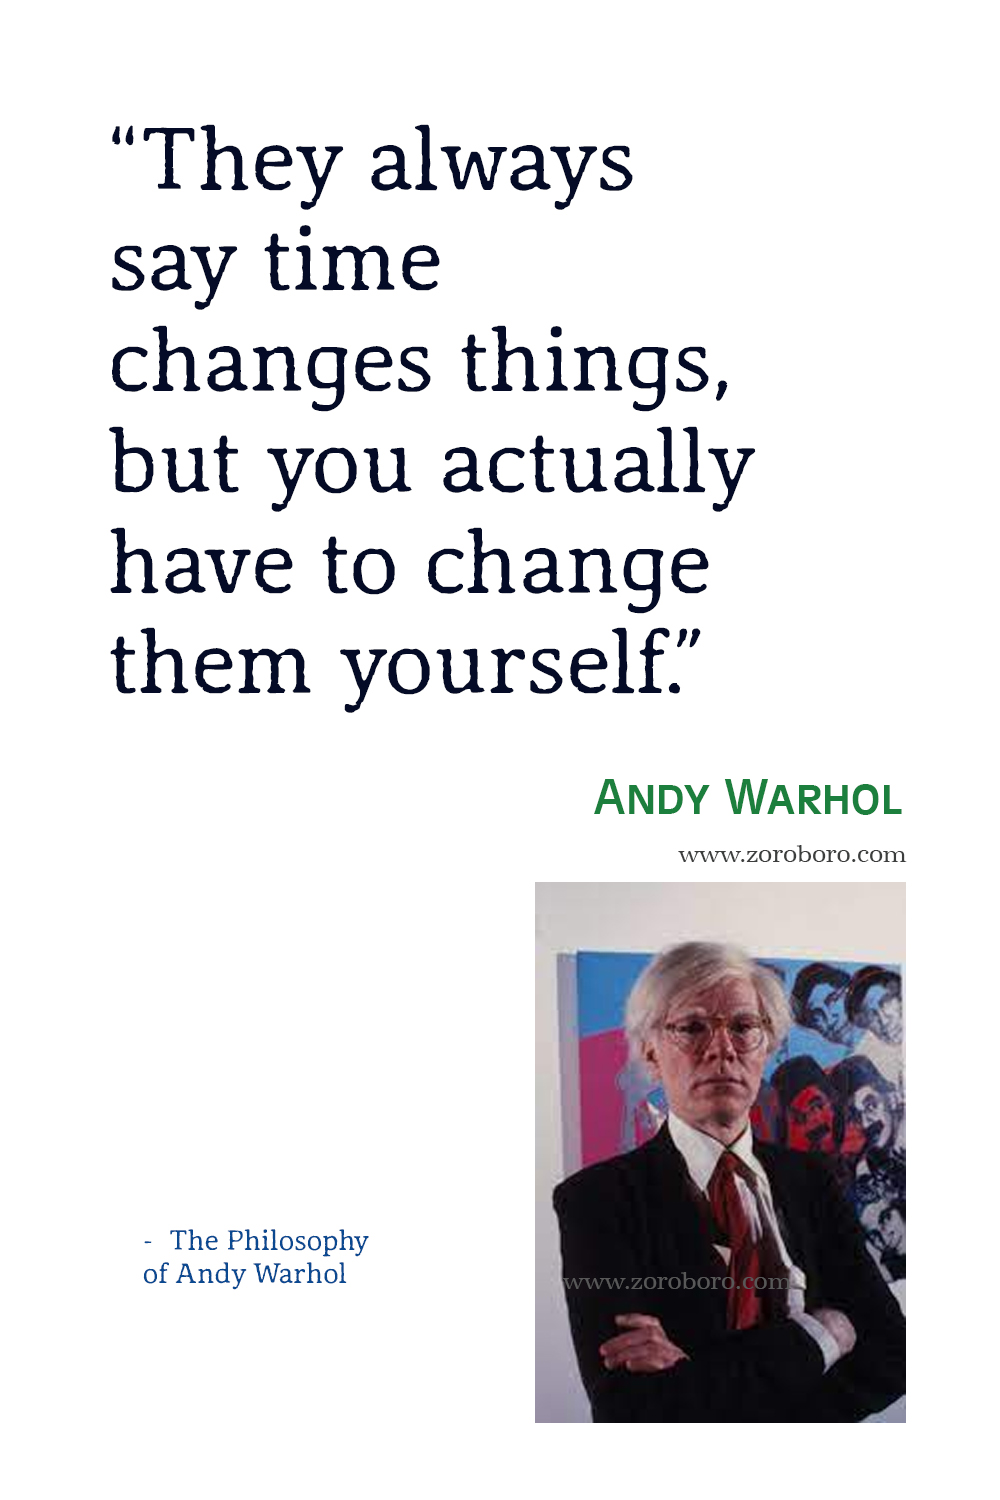 Andy Warhol Quotes, Andy Warhol Art, Love, Paintings, Andy Warhol Books, Movies Quotes, Andy Warhol American visual artist, Pop Art Legend or Fashion Guru